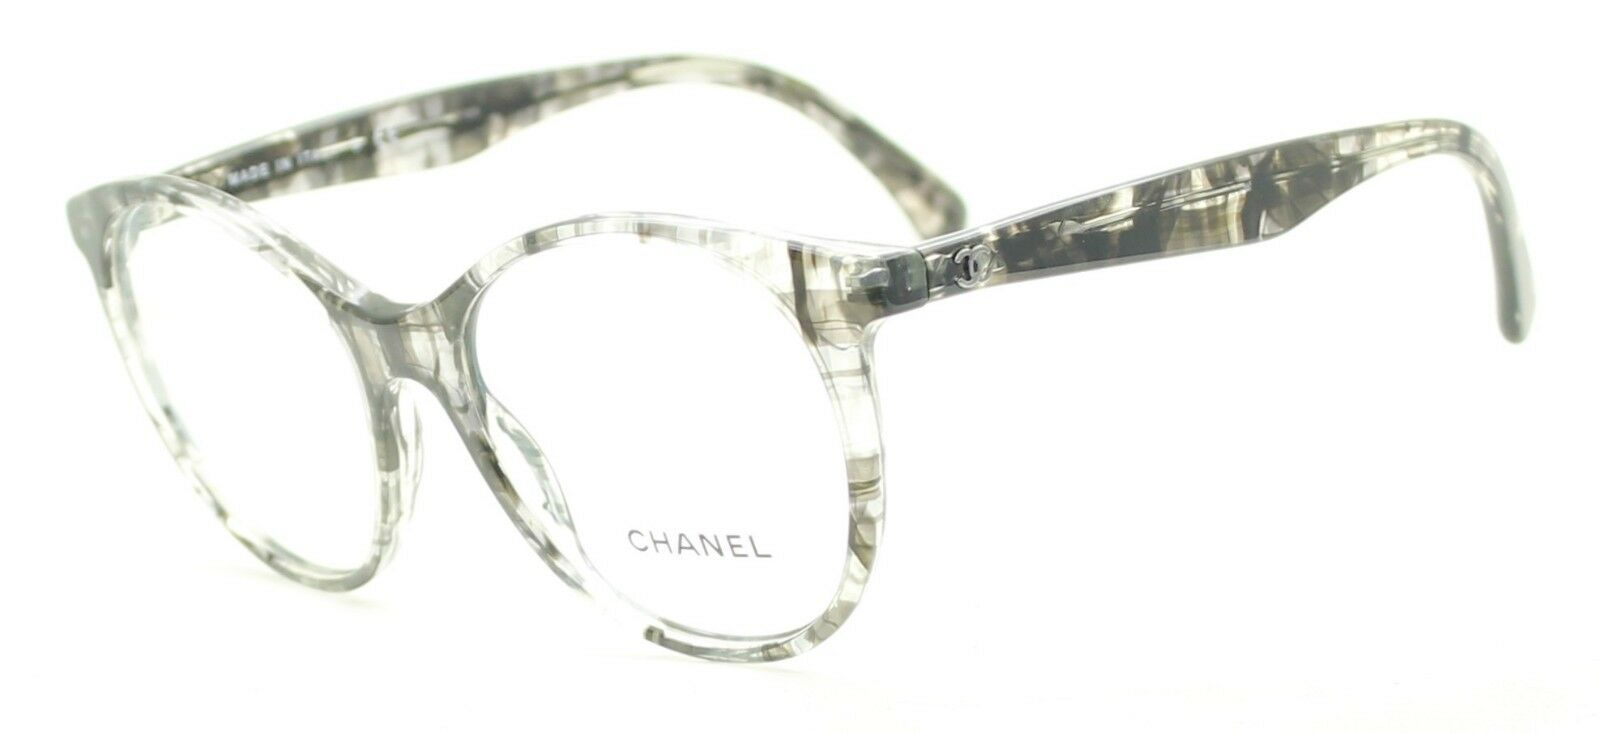 CHANEL 3401 Round Acetate Glasses